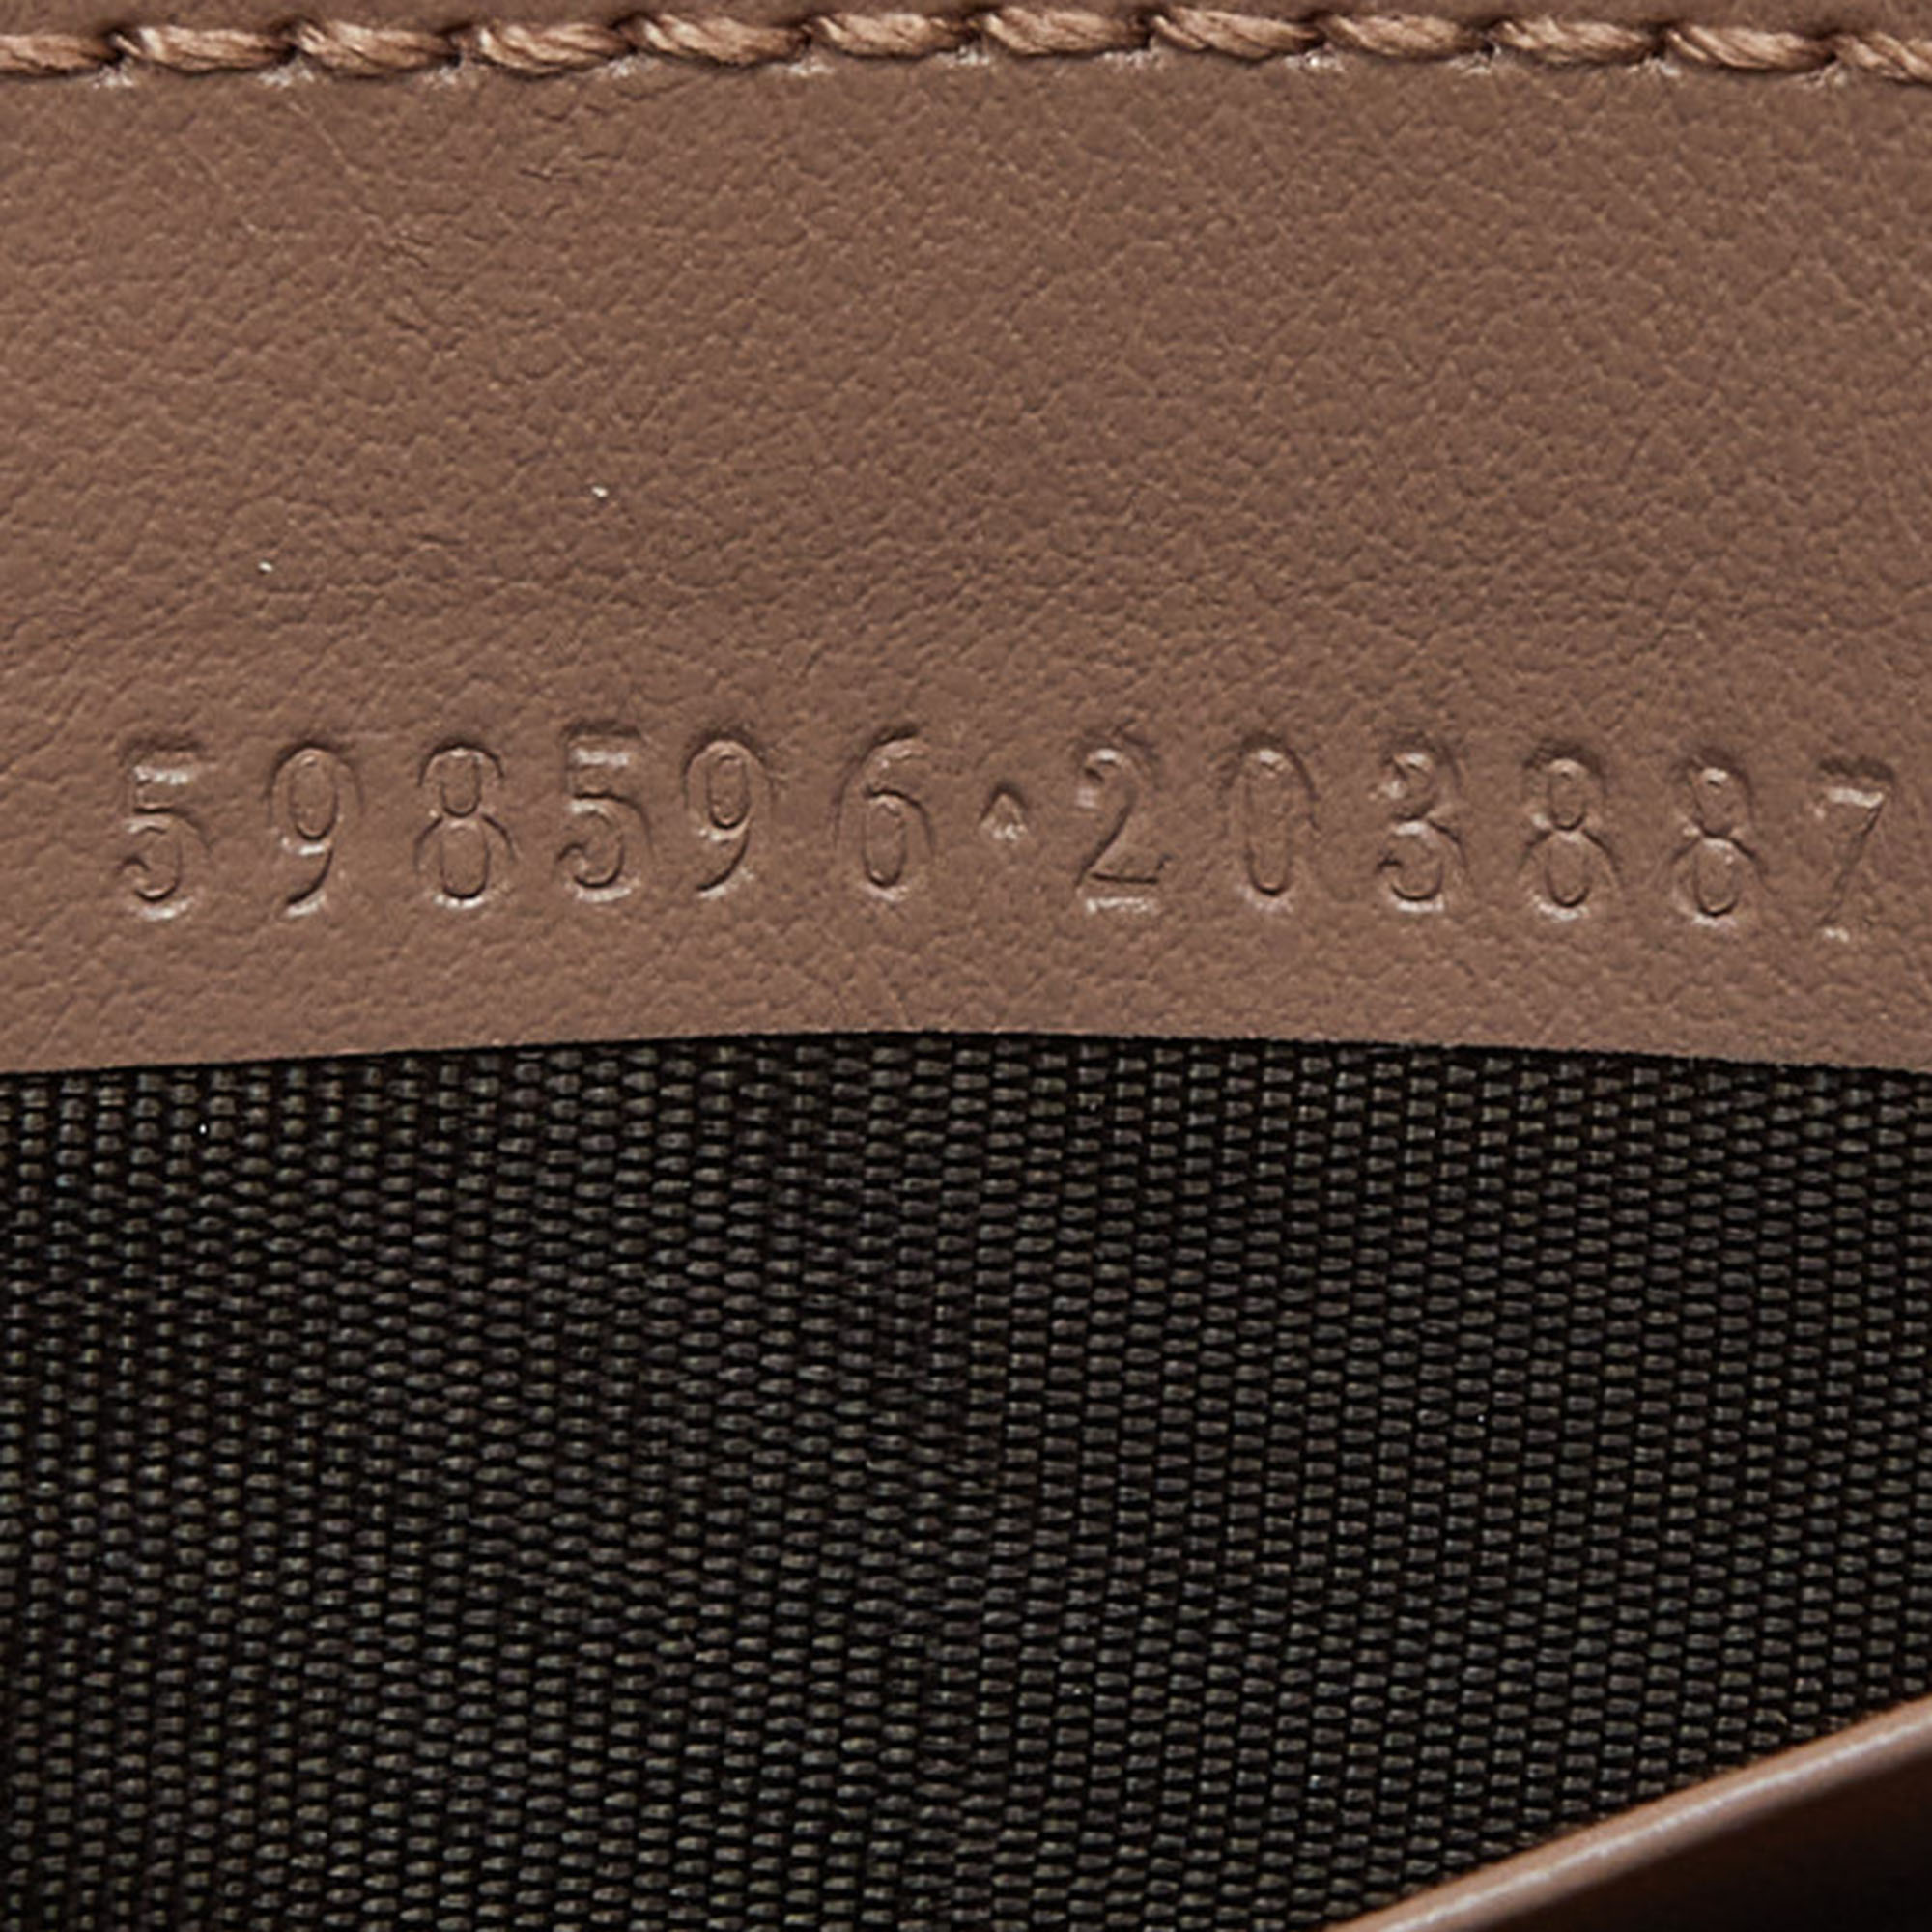 Gucci Pink  Matelassé Leather Mini GG Marmont Chain Crossbody Bag